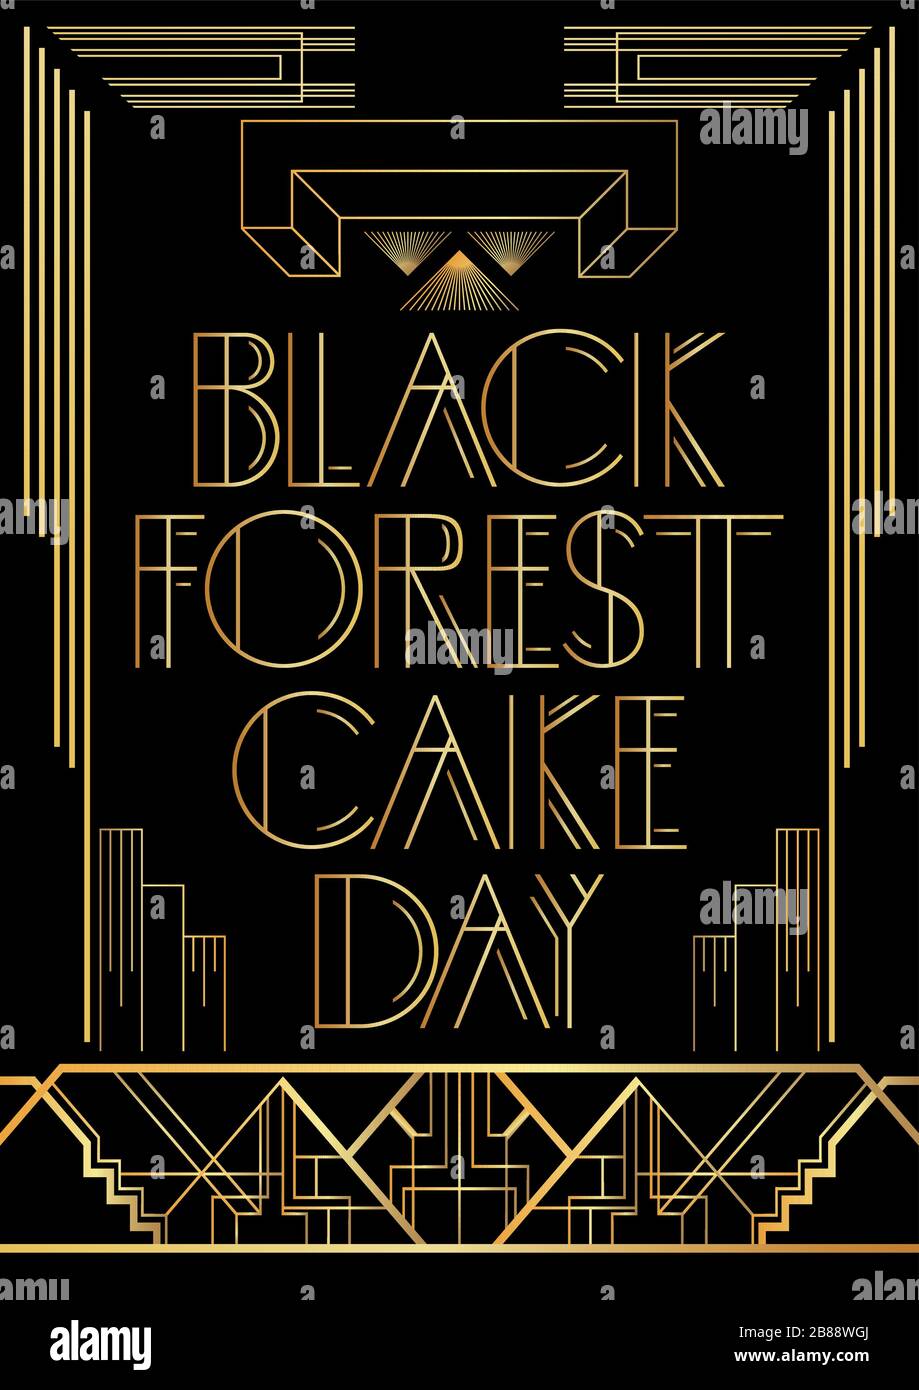 Buy Square Black Forest Cake Online | Same Day Square Black Forest Cake  Delivery - Sendbestgift